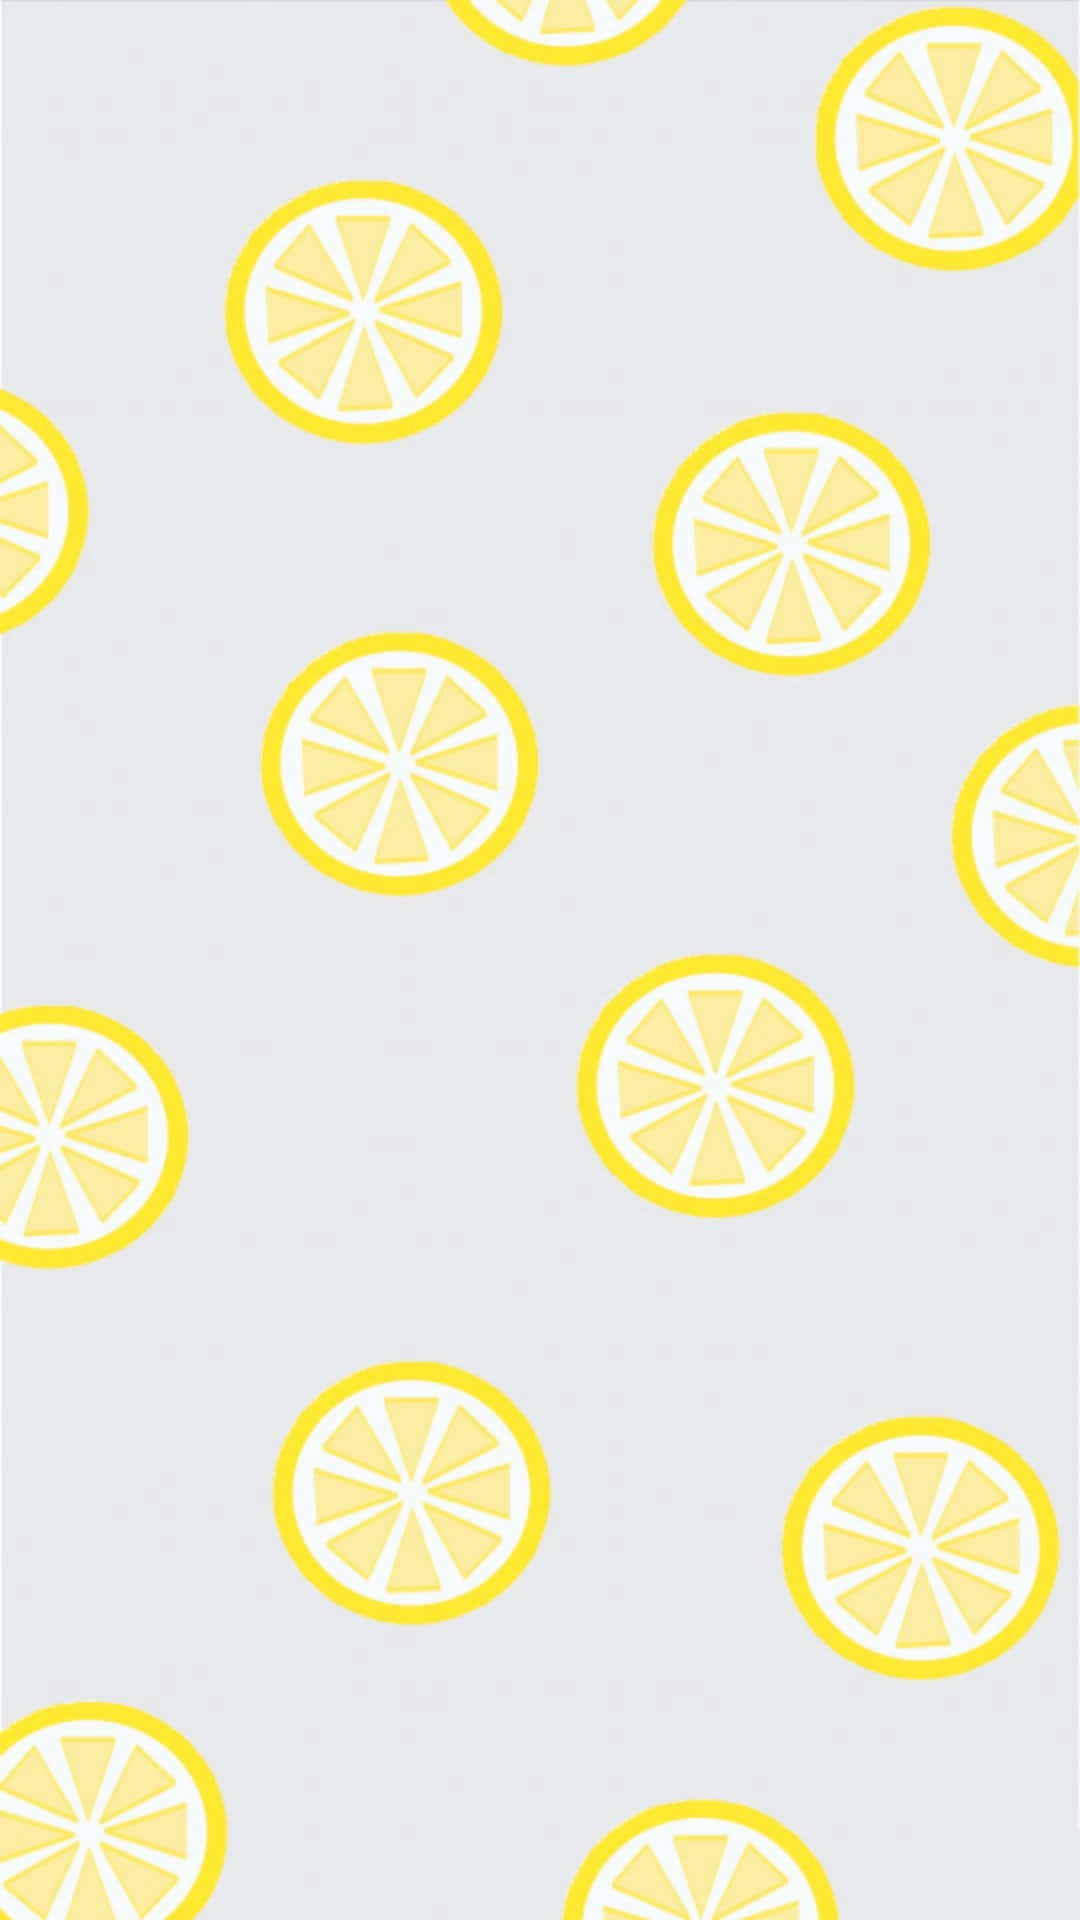 Frischegelbe Ästhetik - Ob Als Duft, Geschmack Oder Ästhetik, Zitrone Bringt Frische In Jeden Moment. Wallpaper